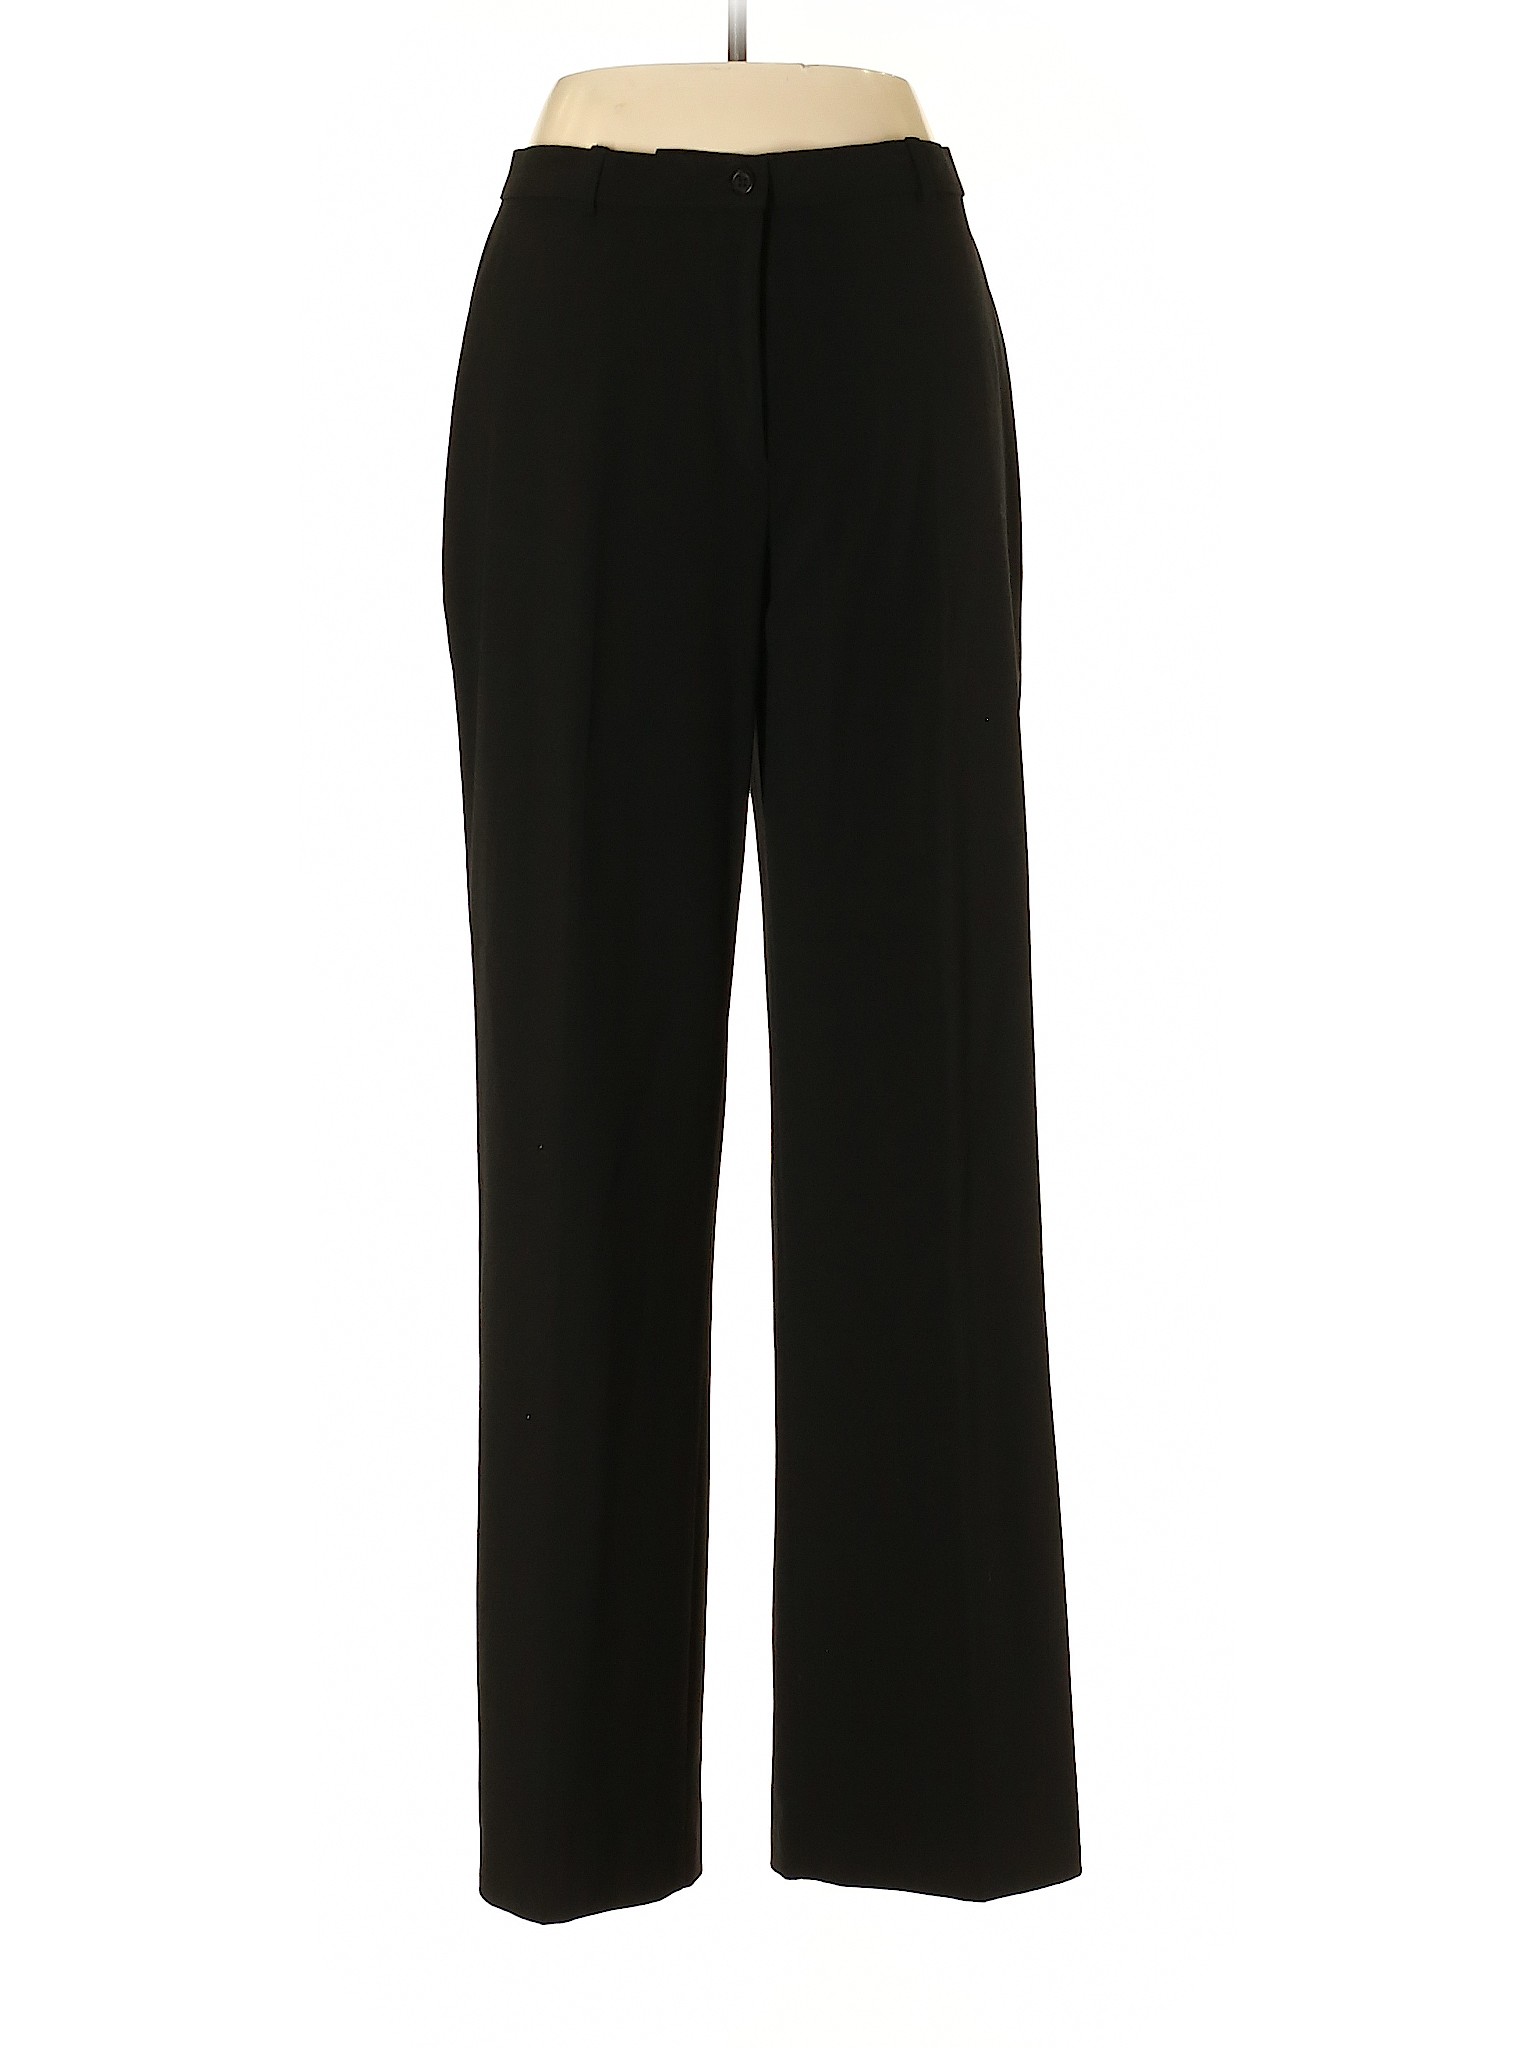 East 5th Solid Black Dress Pants Size 12 - 73% off | thredUP